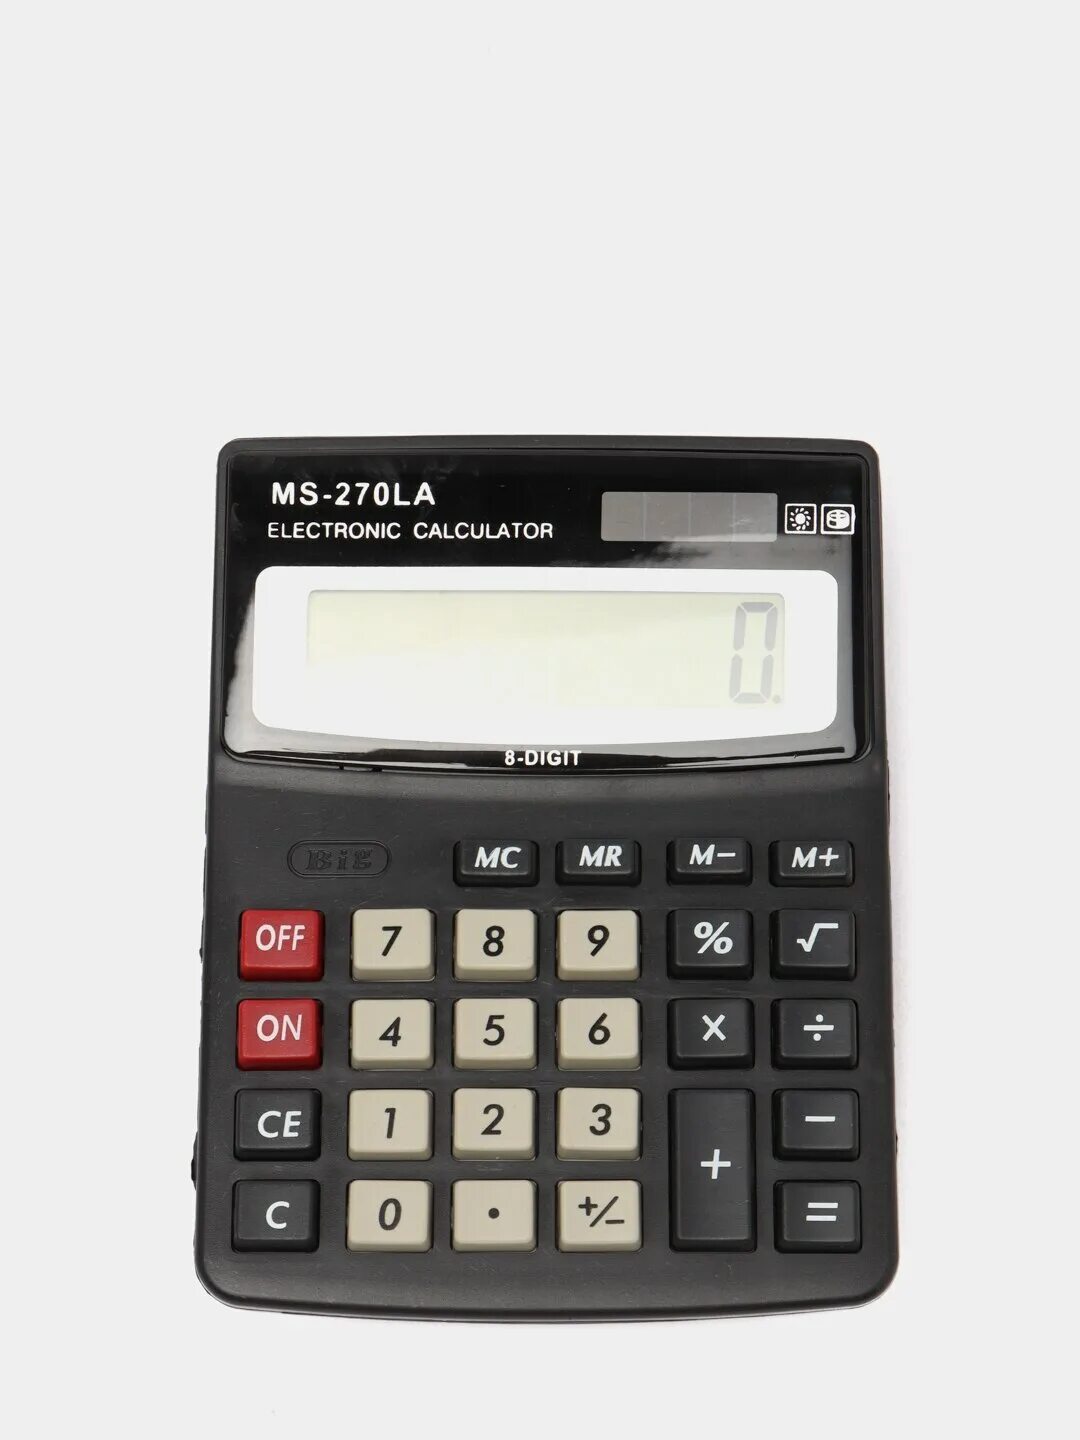 Калькулятор мс. MS 270la Electronic calculator. Калькулятор clton CL-270la. Калькулятор MS-270la.